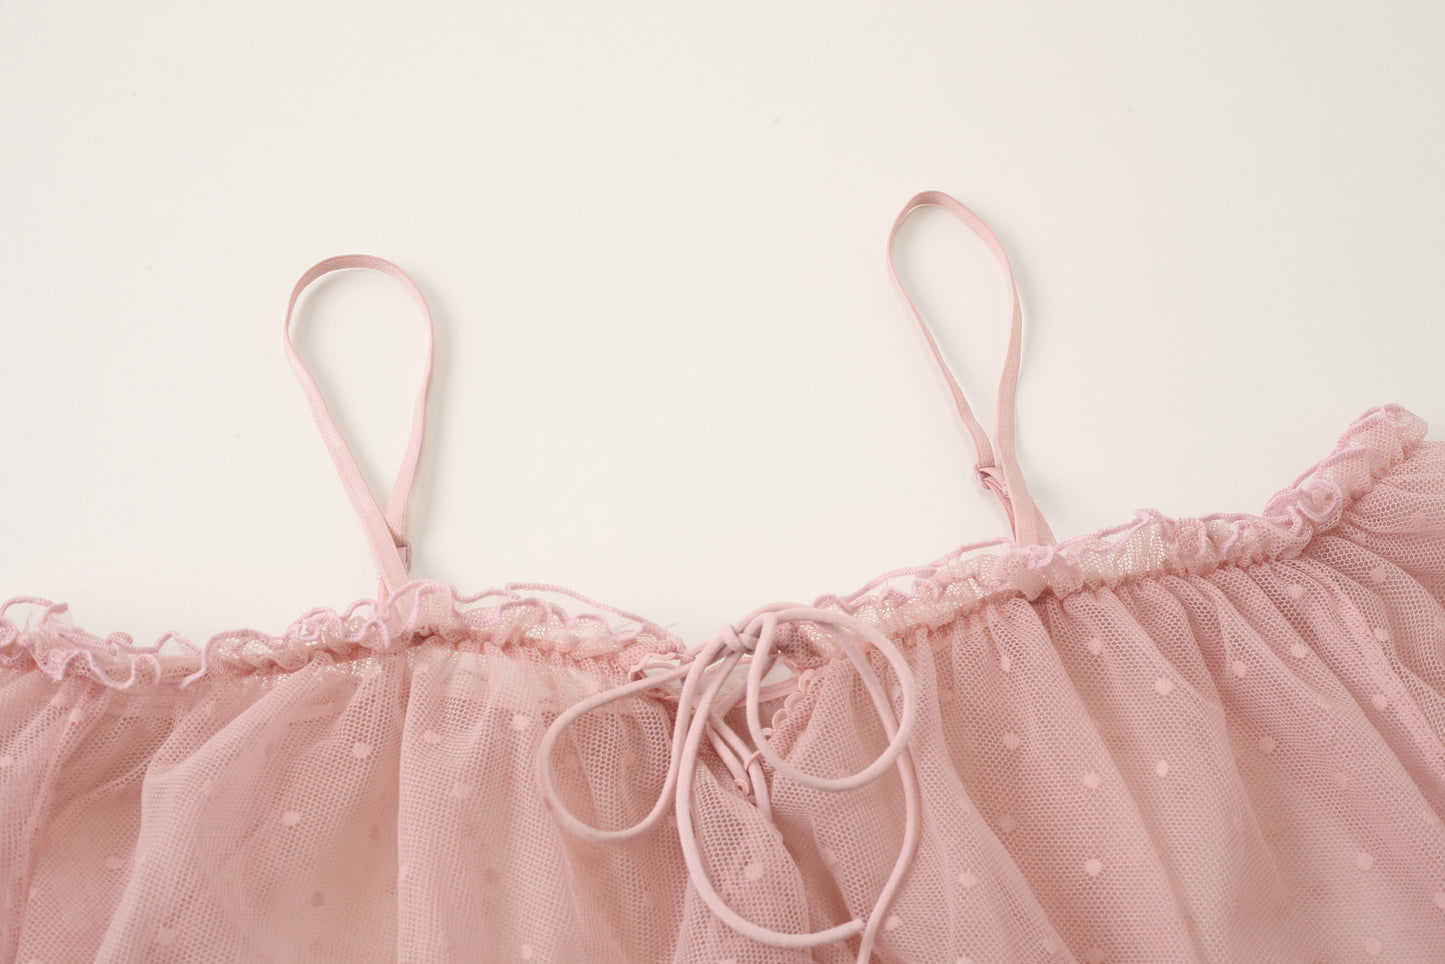 Pink Polka Dot Sheer Lingerie Top for Women - Flirty and Playful